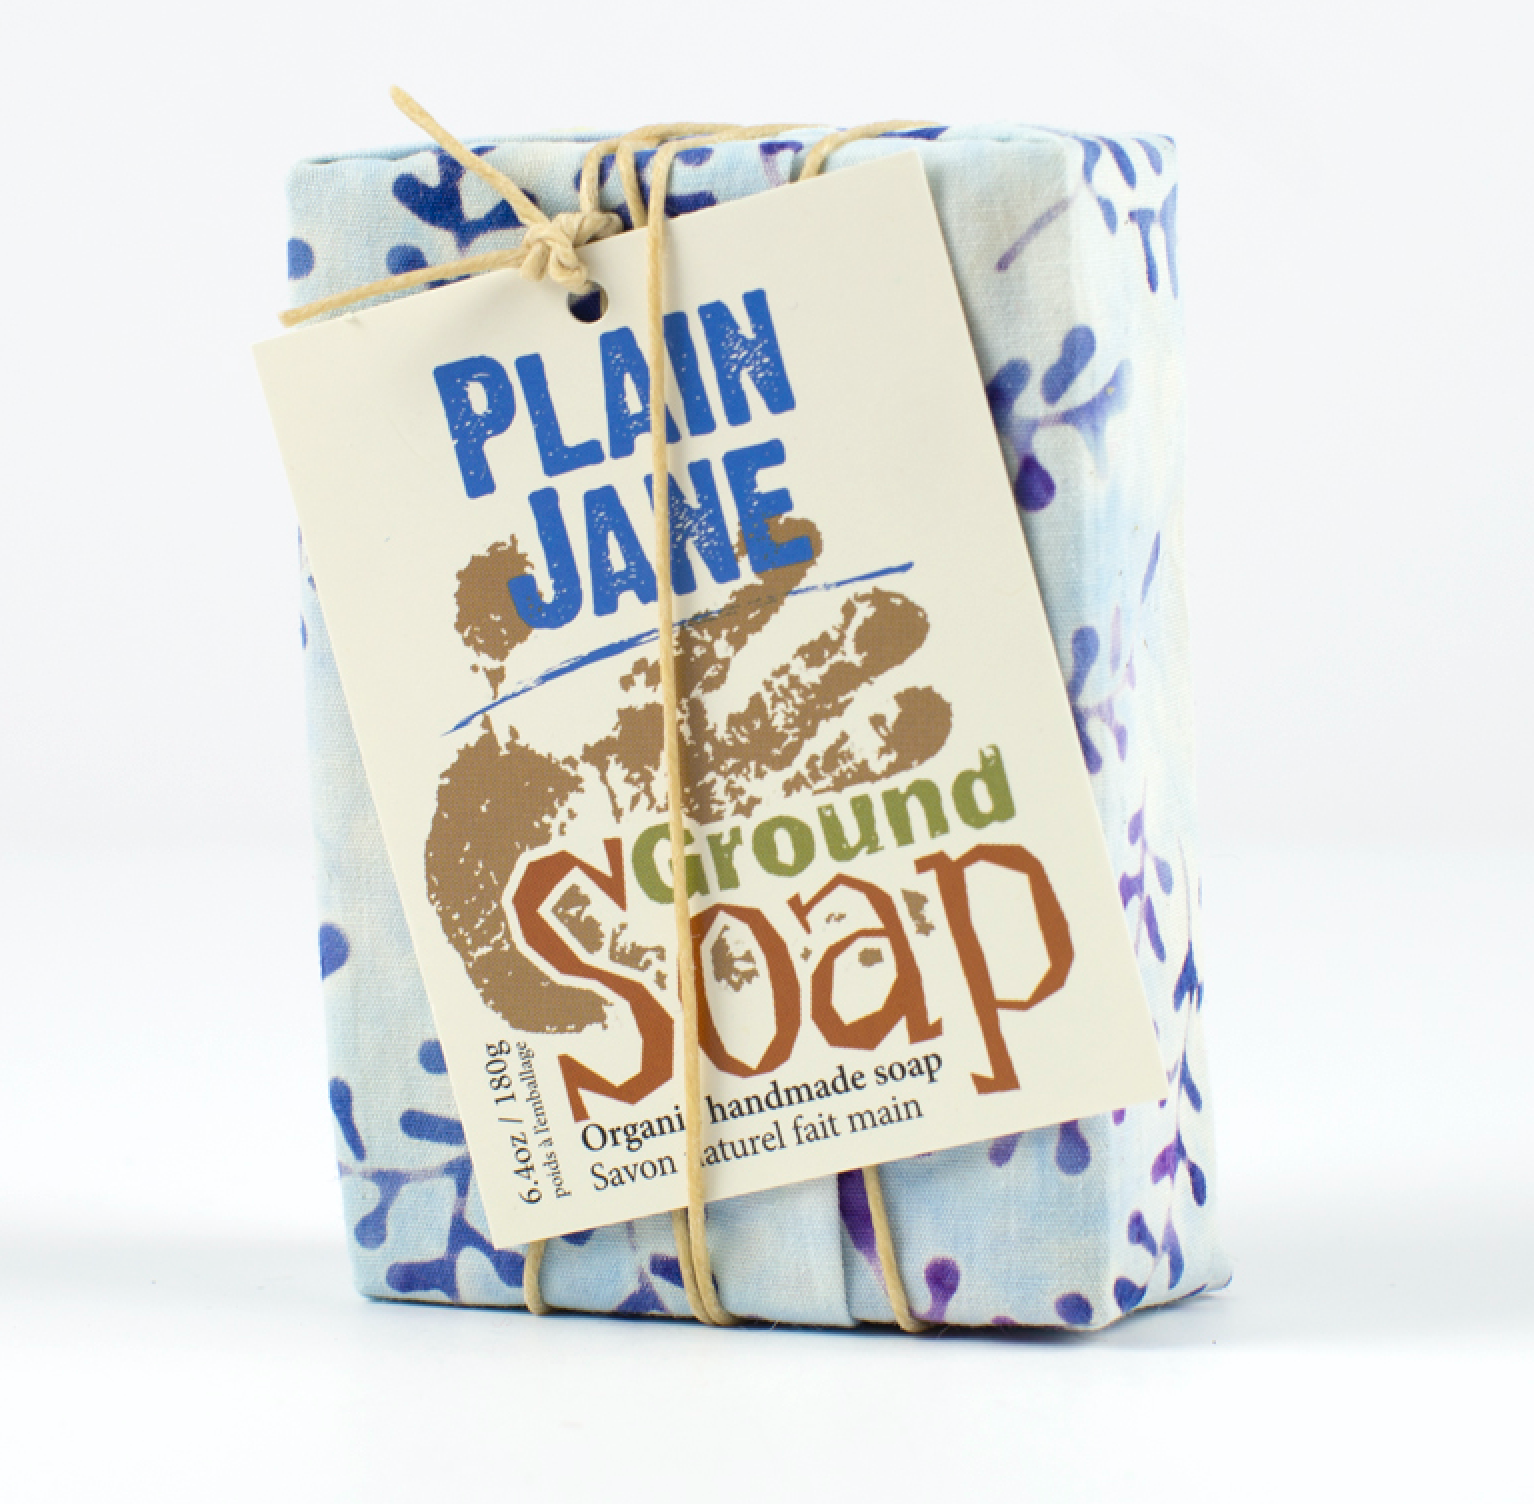 Ground Soap - Plain Jane